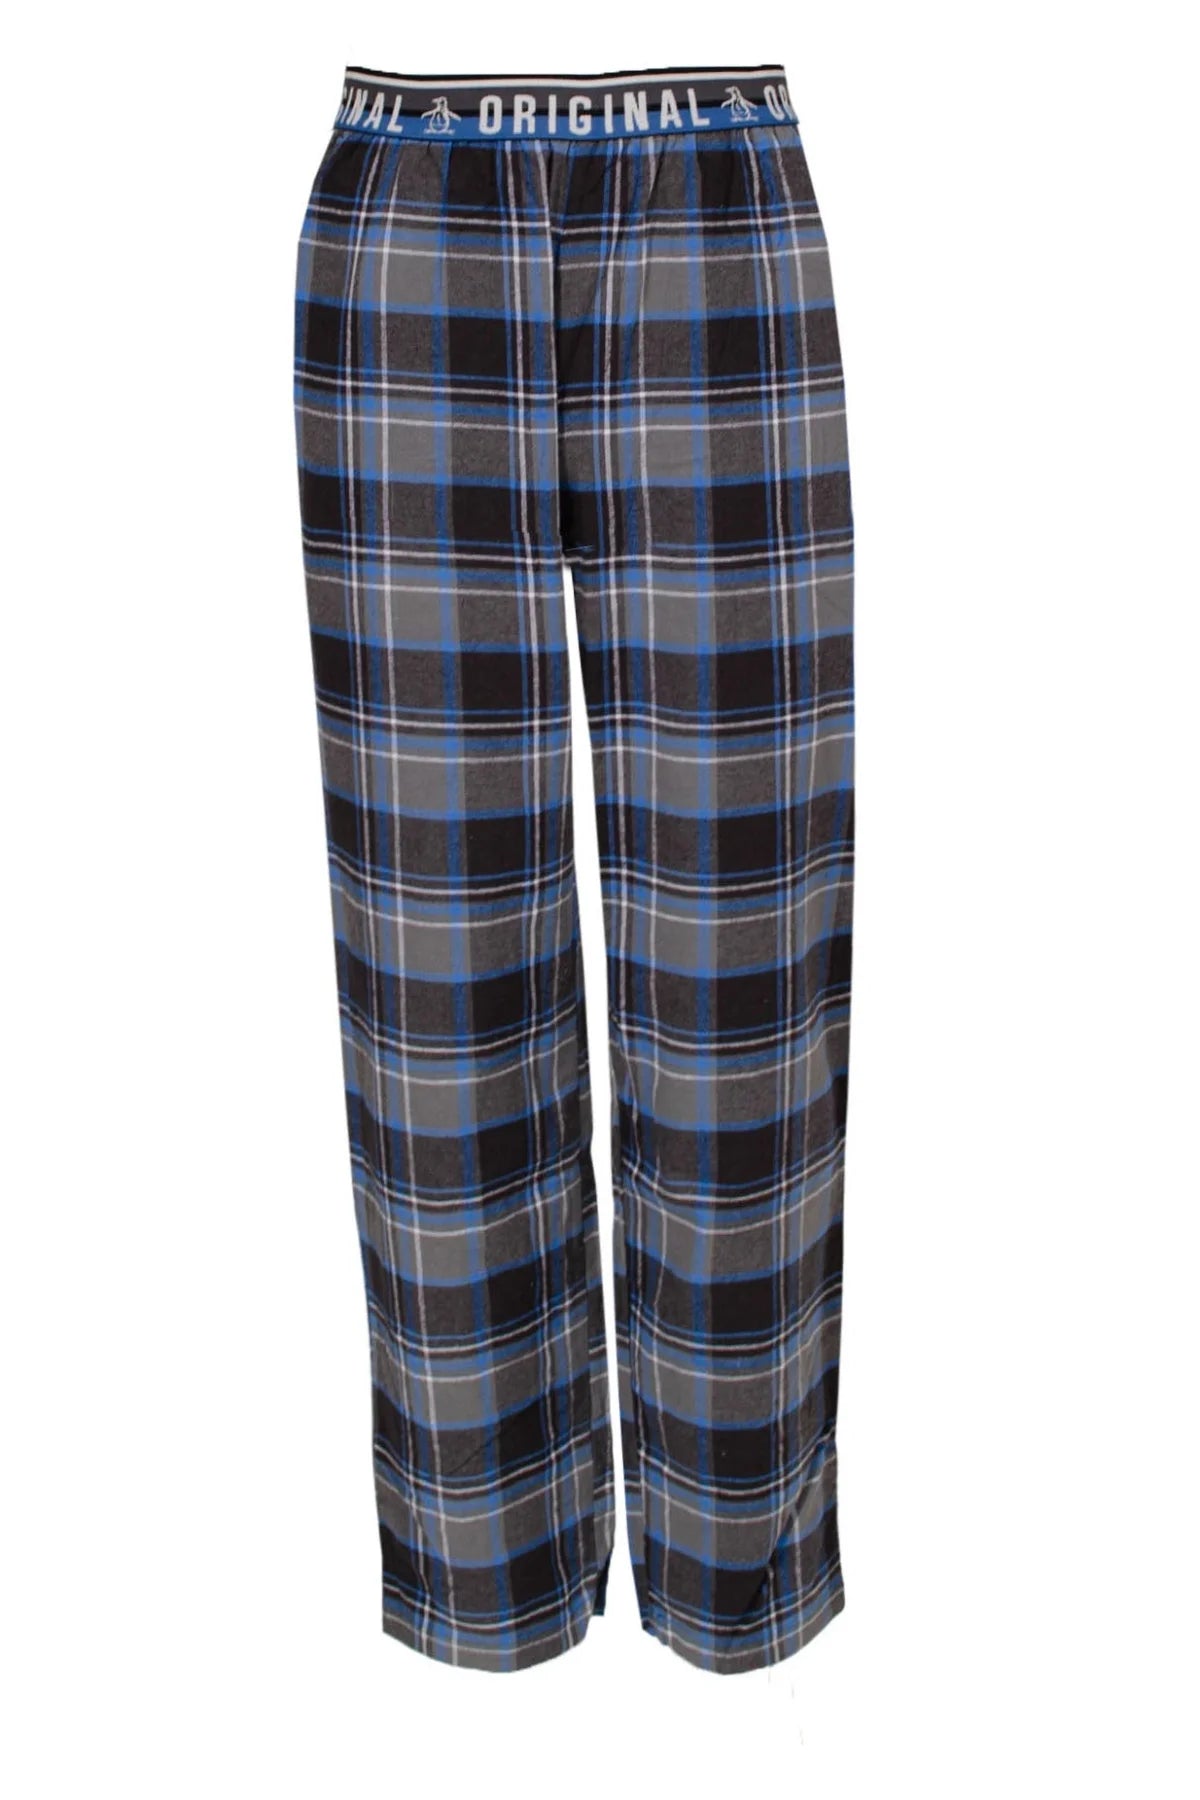 Penguin Cotton Check Pyjama Lounge Pants Blue/Grey / 3XL